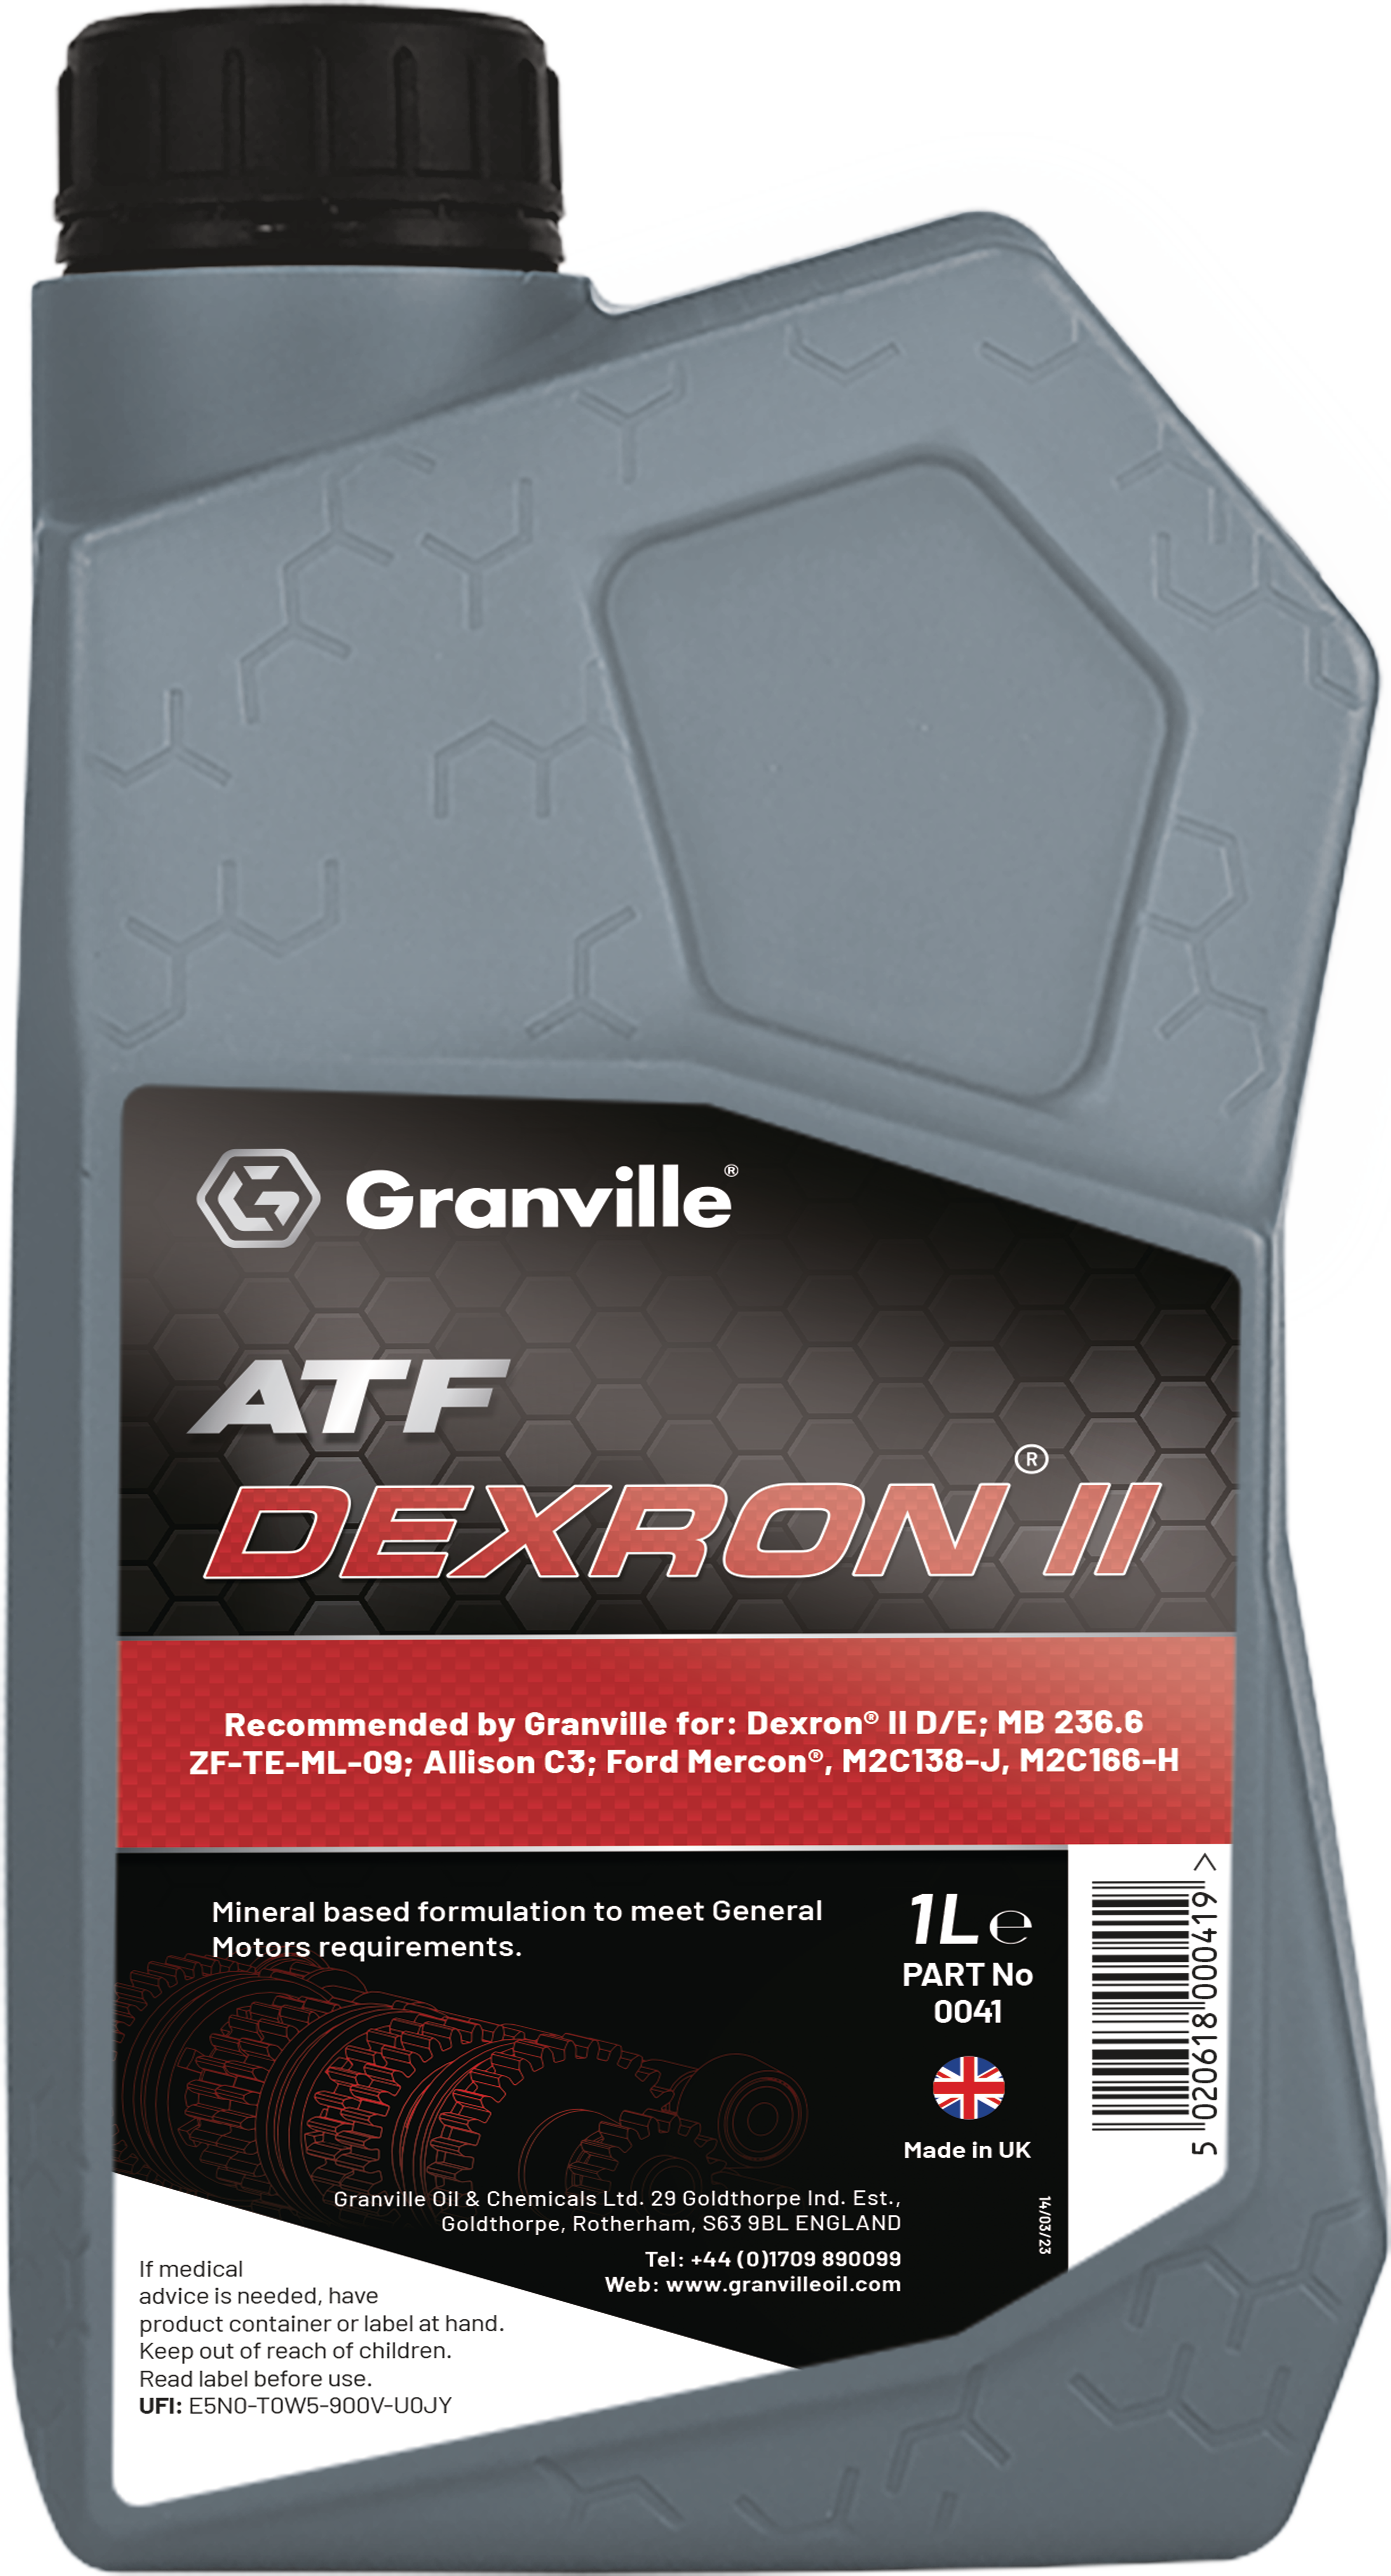 Granville Atf Dexron II 2 Automatic Transmission Fluid Oil 1 Litre